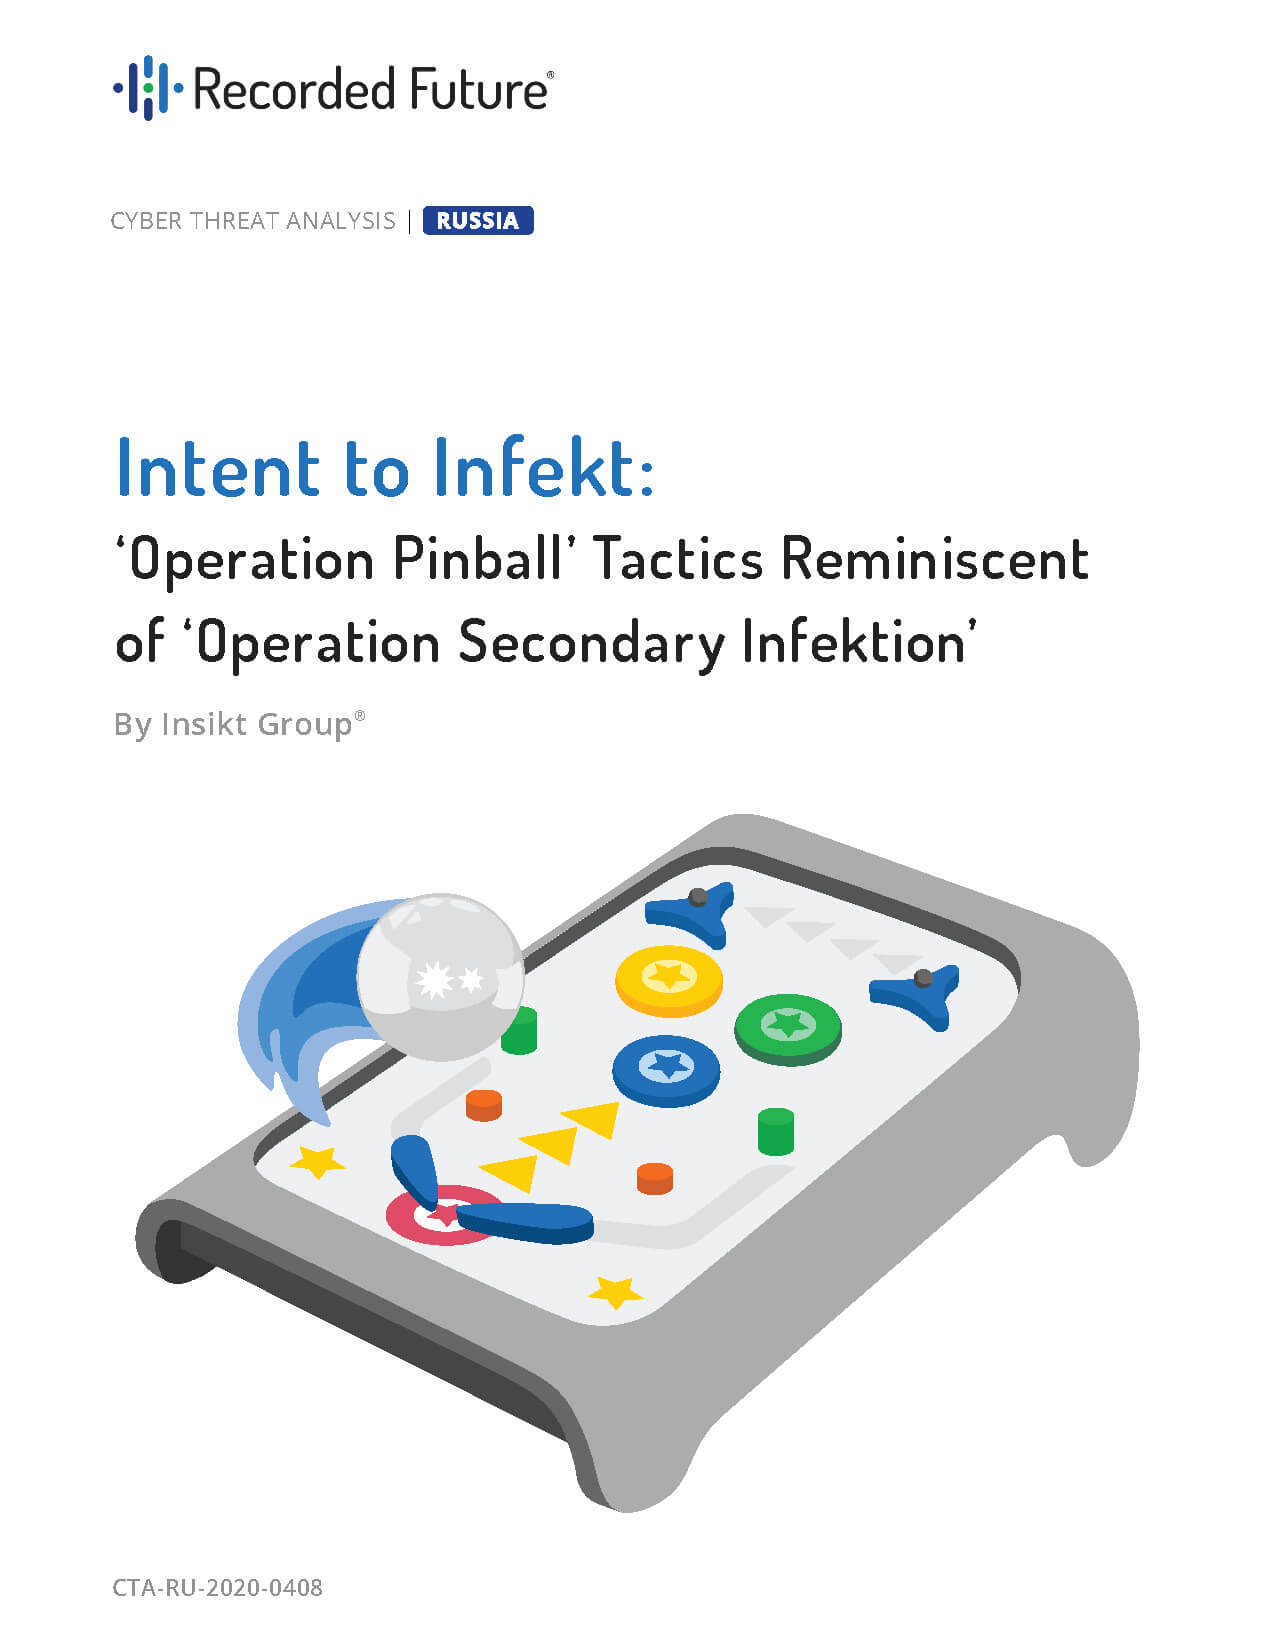 Intent to Infekt: Operation Pinball' Tactics Reminiscent of 'Operation Secondary Infektion' Report